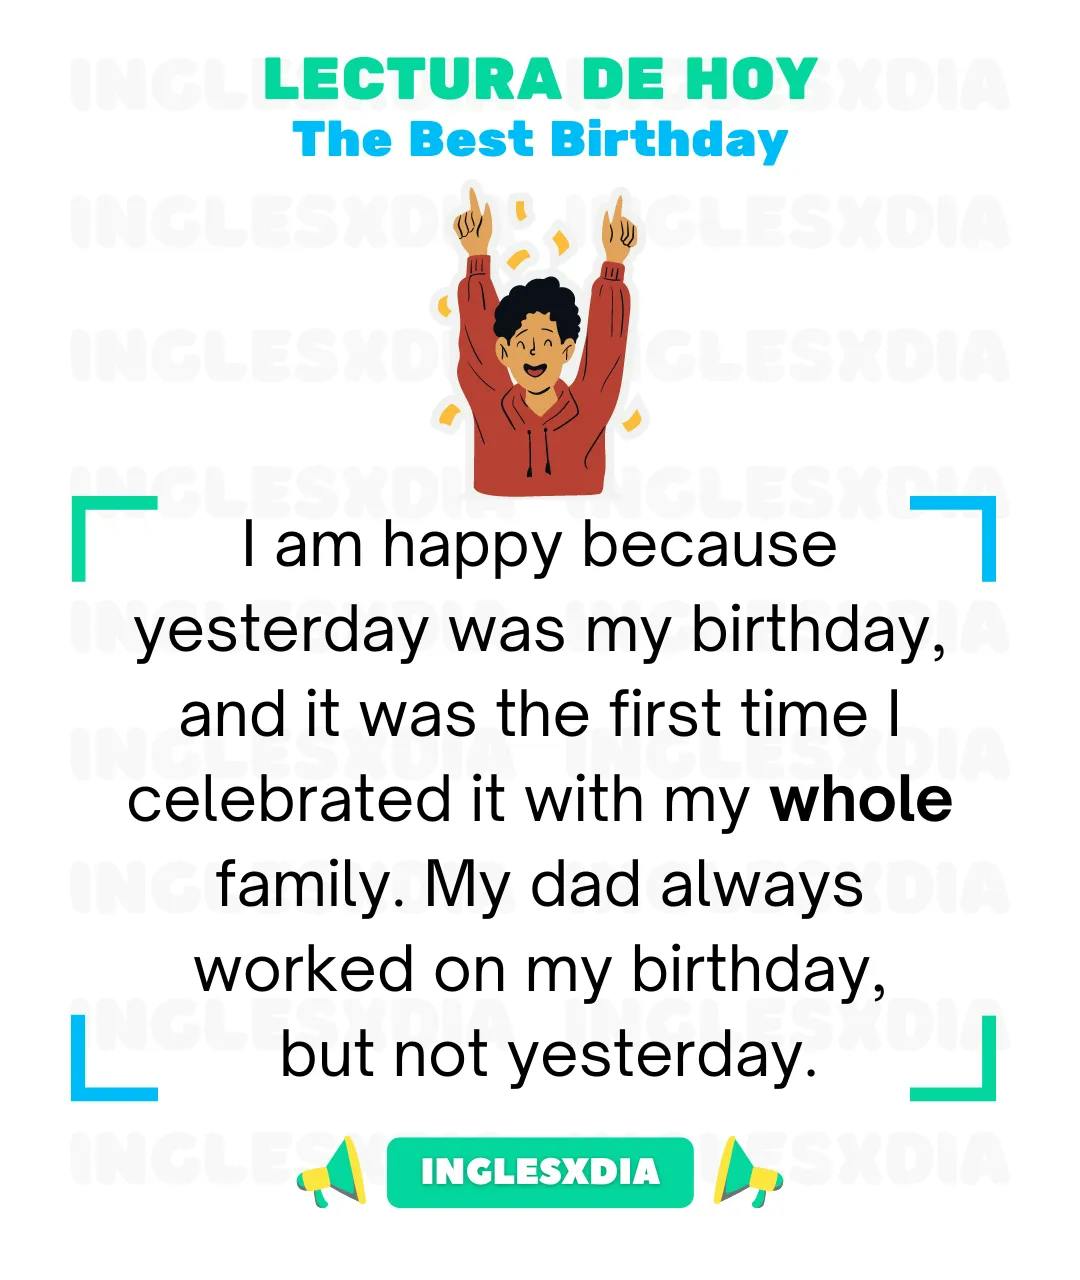 The Best Birthday